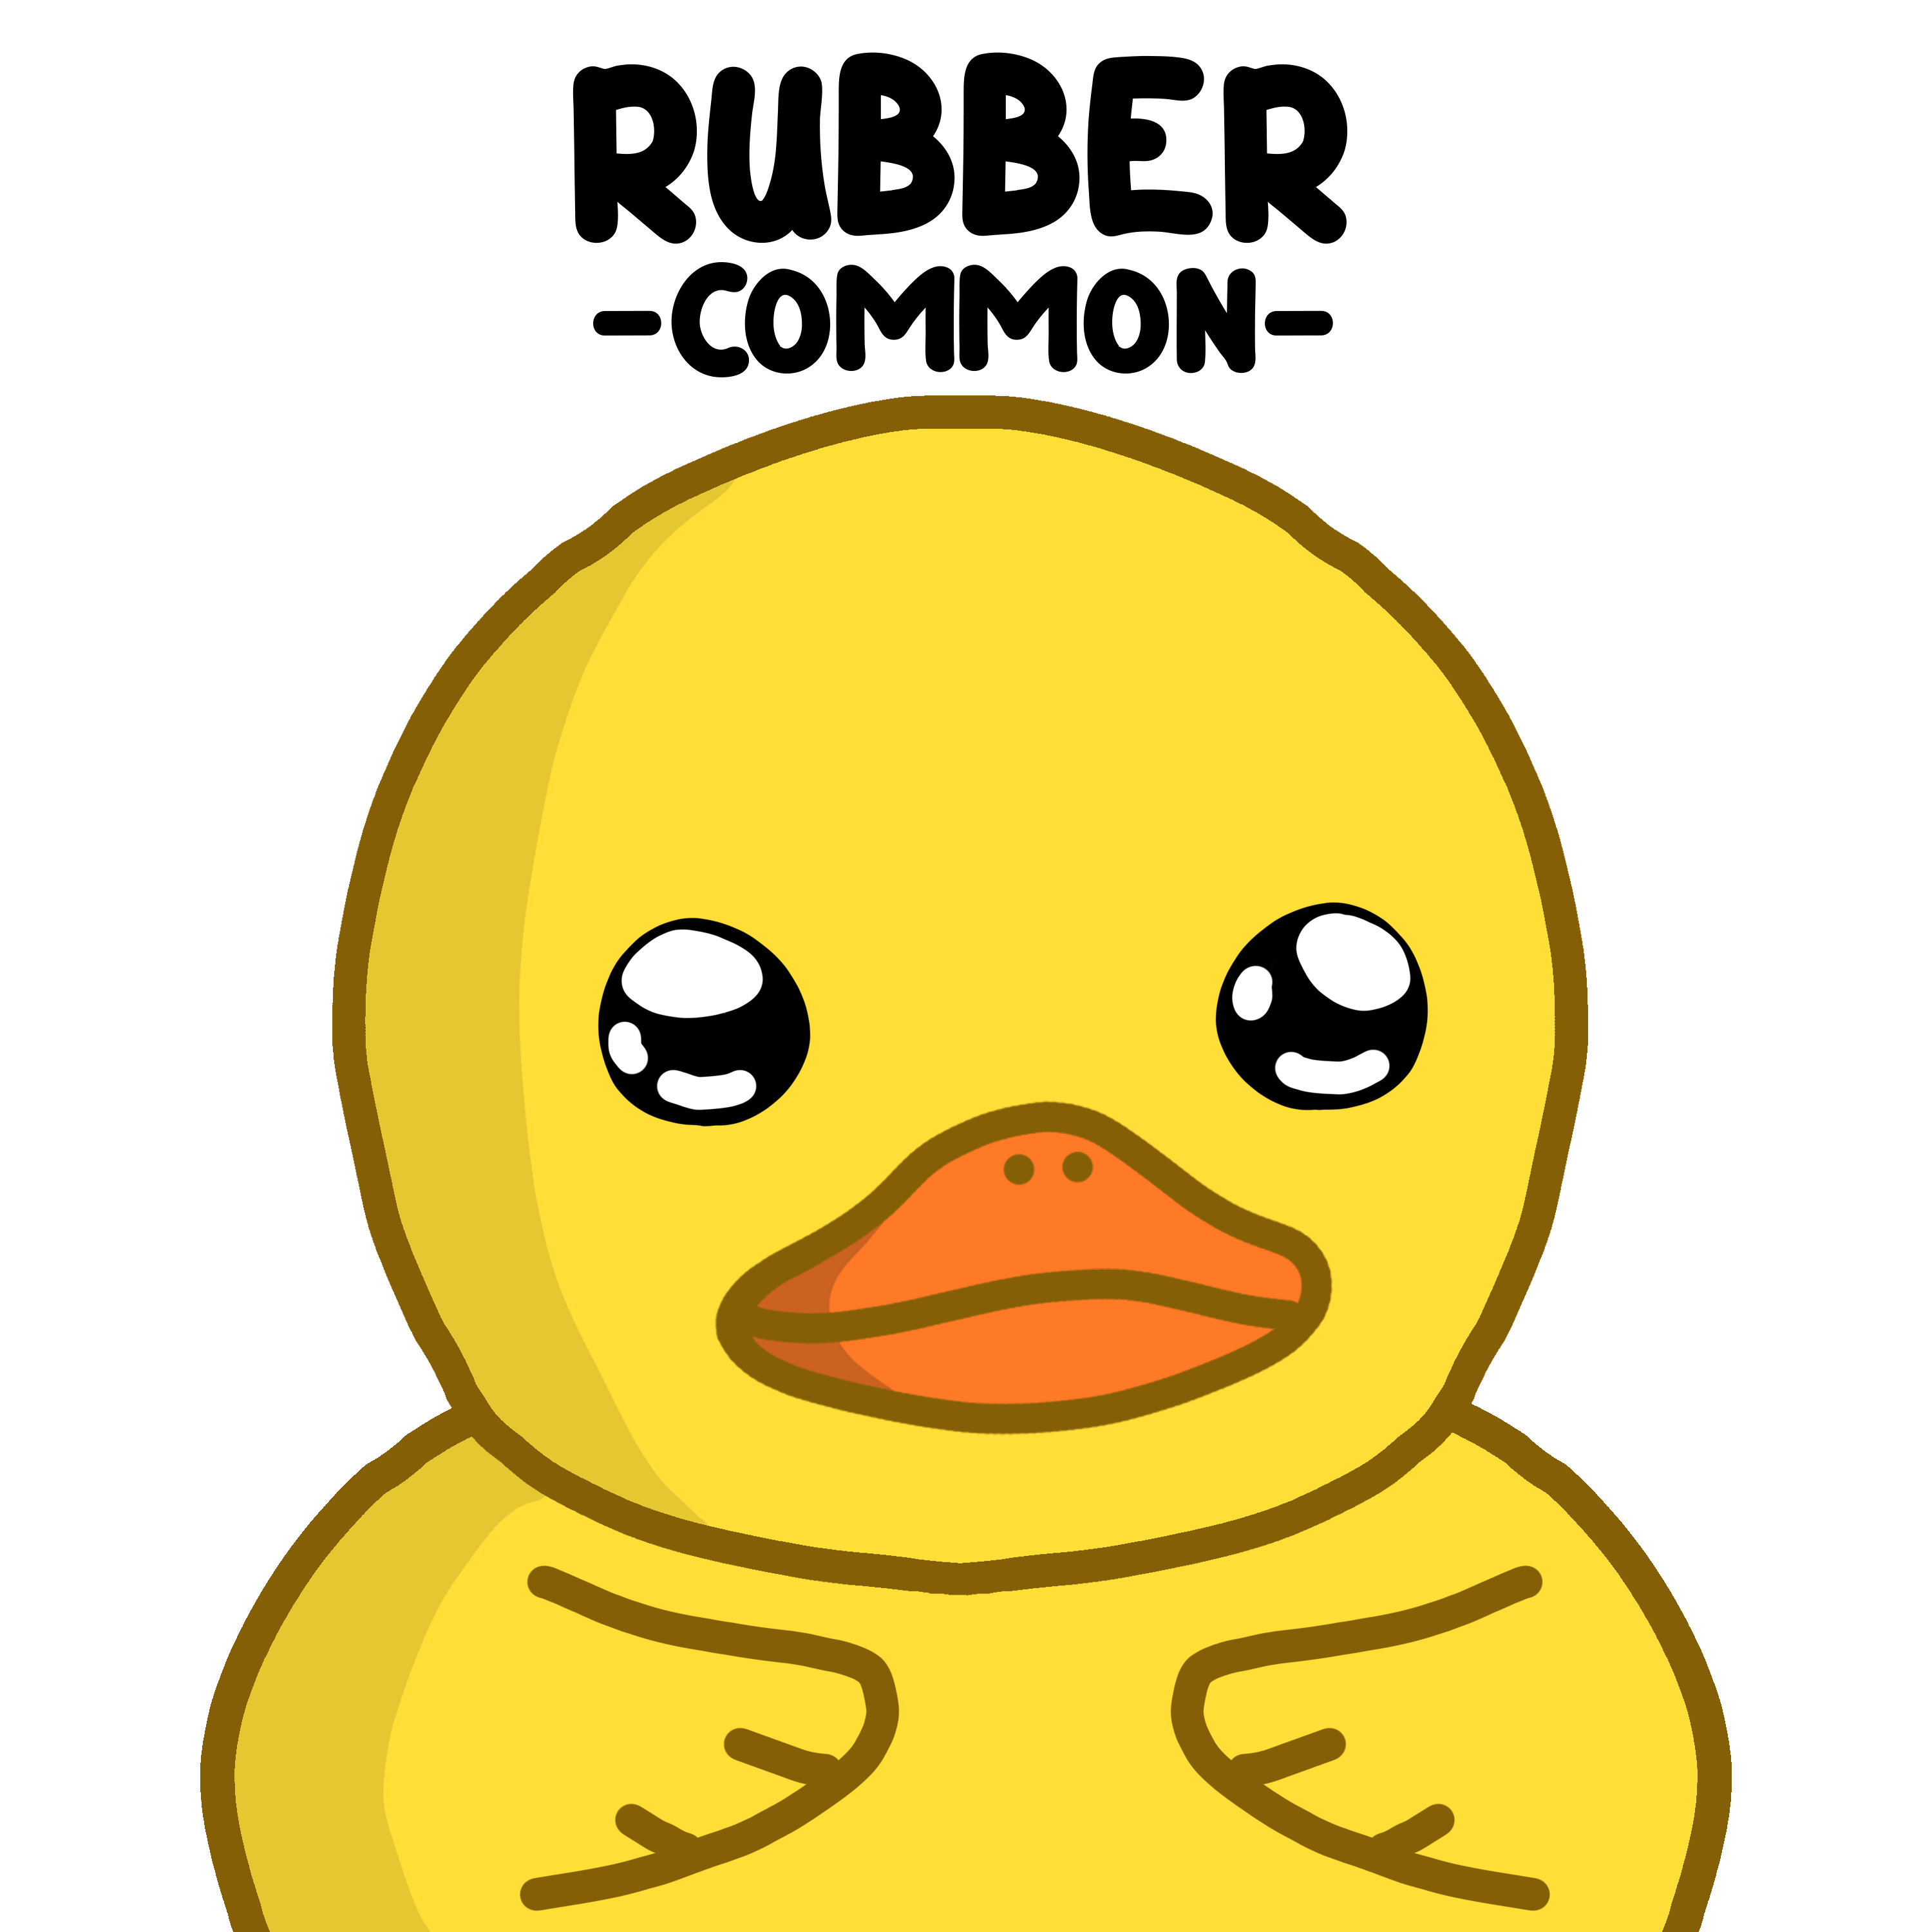 Rubber-duck